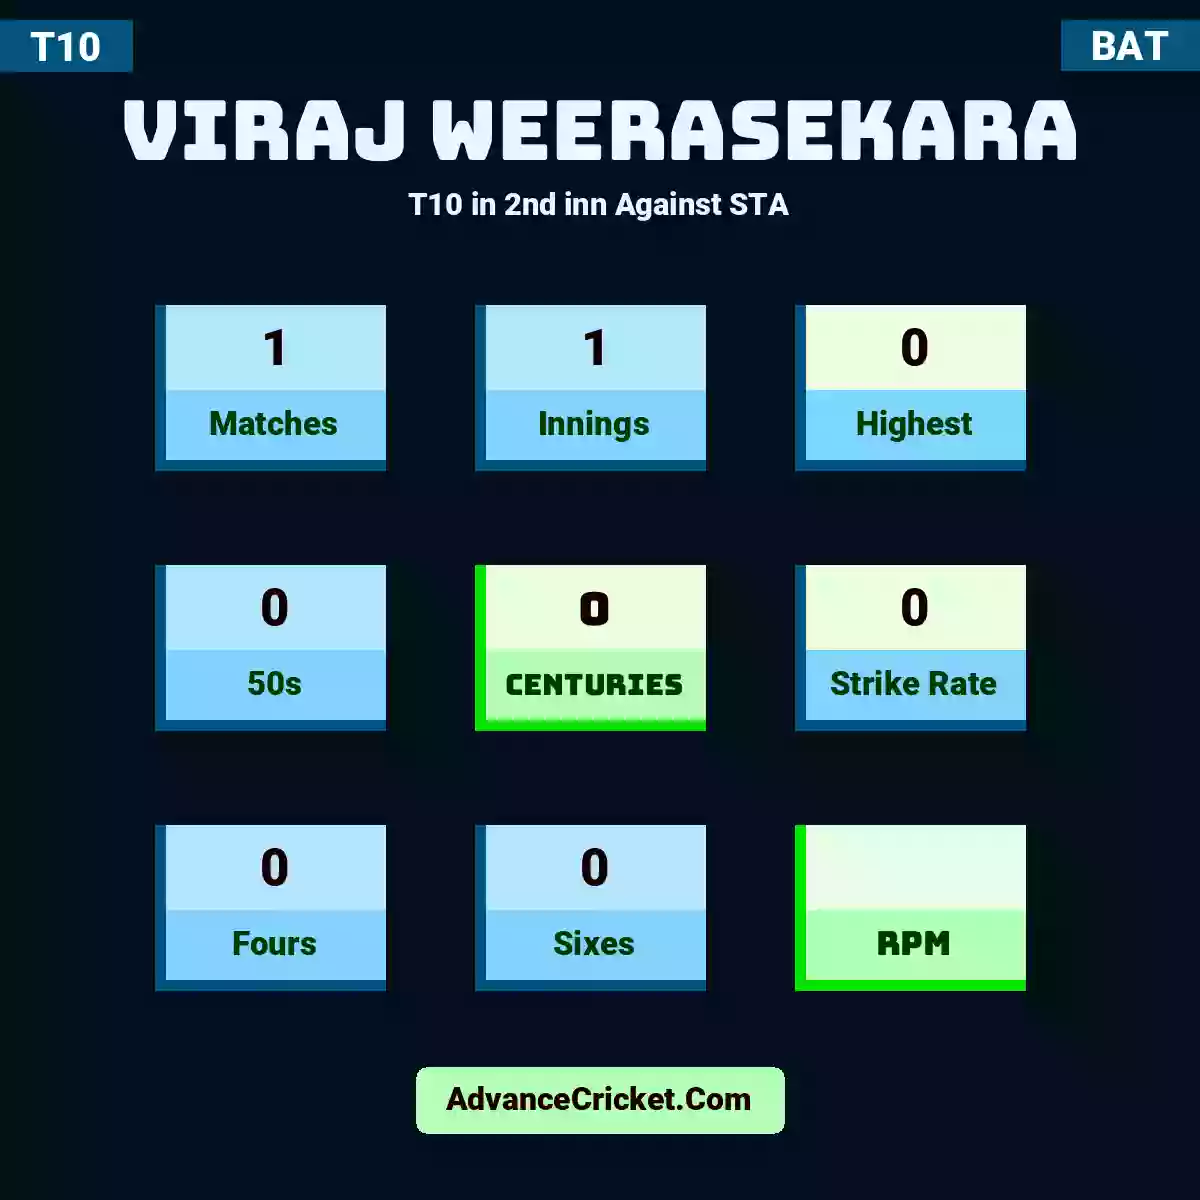 Viraj Weerasekara T10  in 2nd inn Against STA, Viraj Weerasekara played 1 matches, scored 0 runs as highest, 0 half-centuries, and 0 centuries, with a strike rate of 0. V.Weerasekara hit 0 fours and 0 sixes.